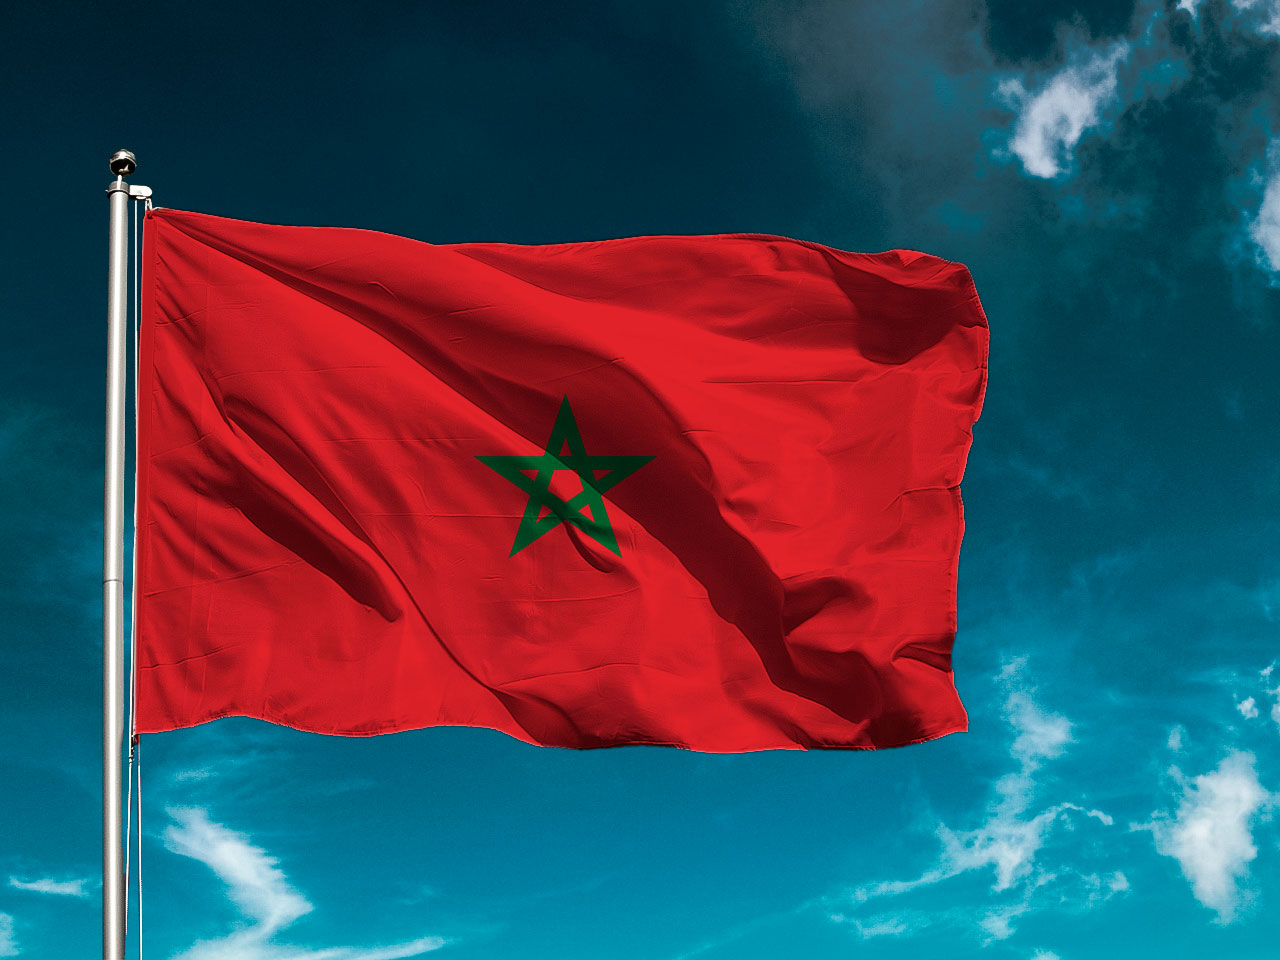 Visa Maroc